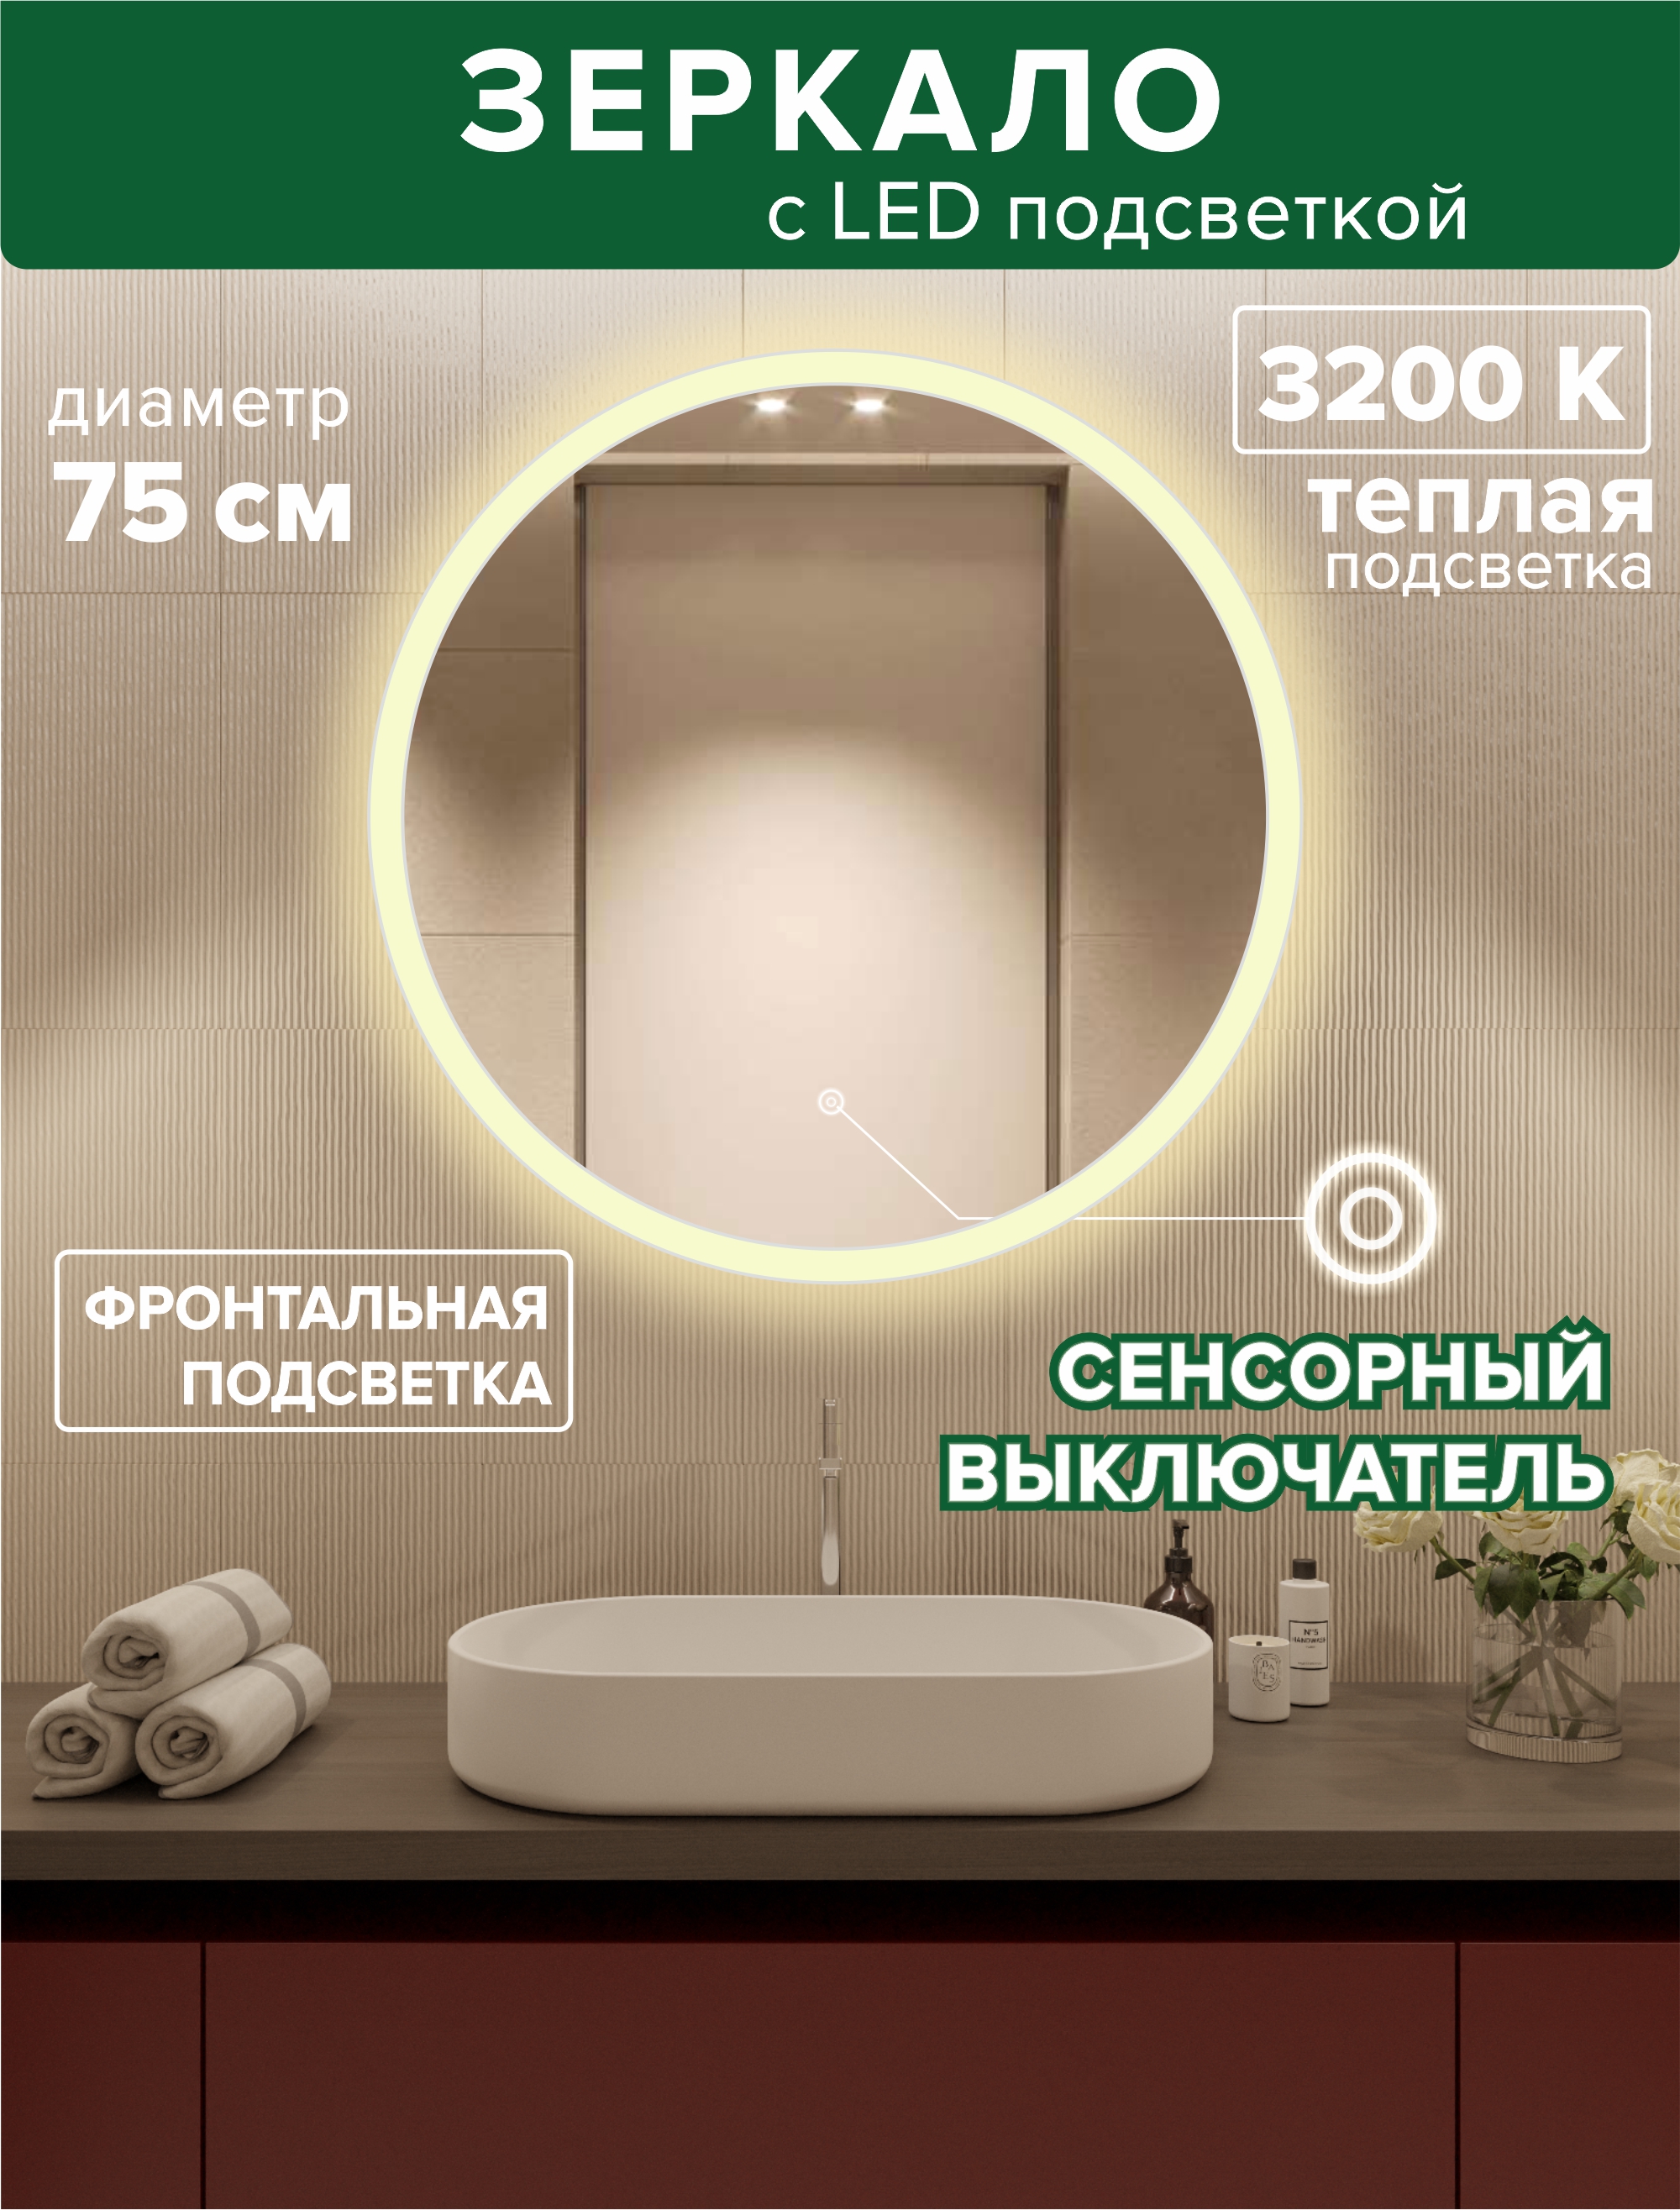 Зеркало для ванной Alfa Mirrors фронтальная теплая подсветка 3200К, круглое 75см,MSvet-75t led plr 200 20m 24v ww bl w o белая теплая провод соединяемая без силового шнура 24вольта